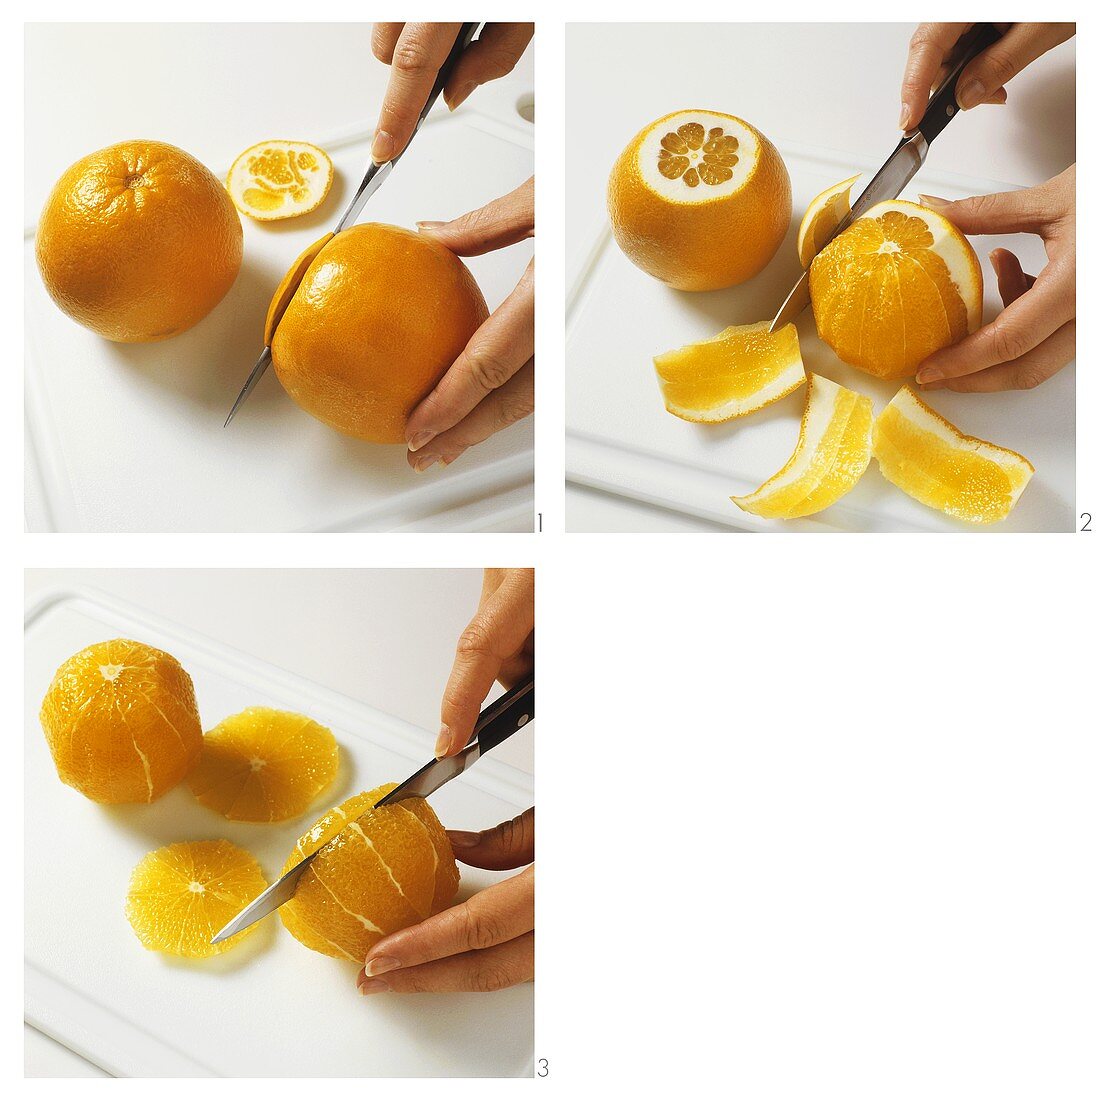 Preparing an orange